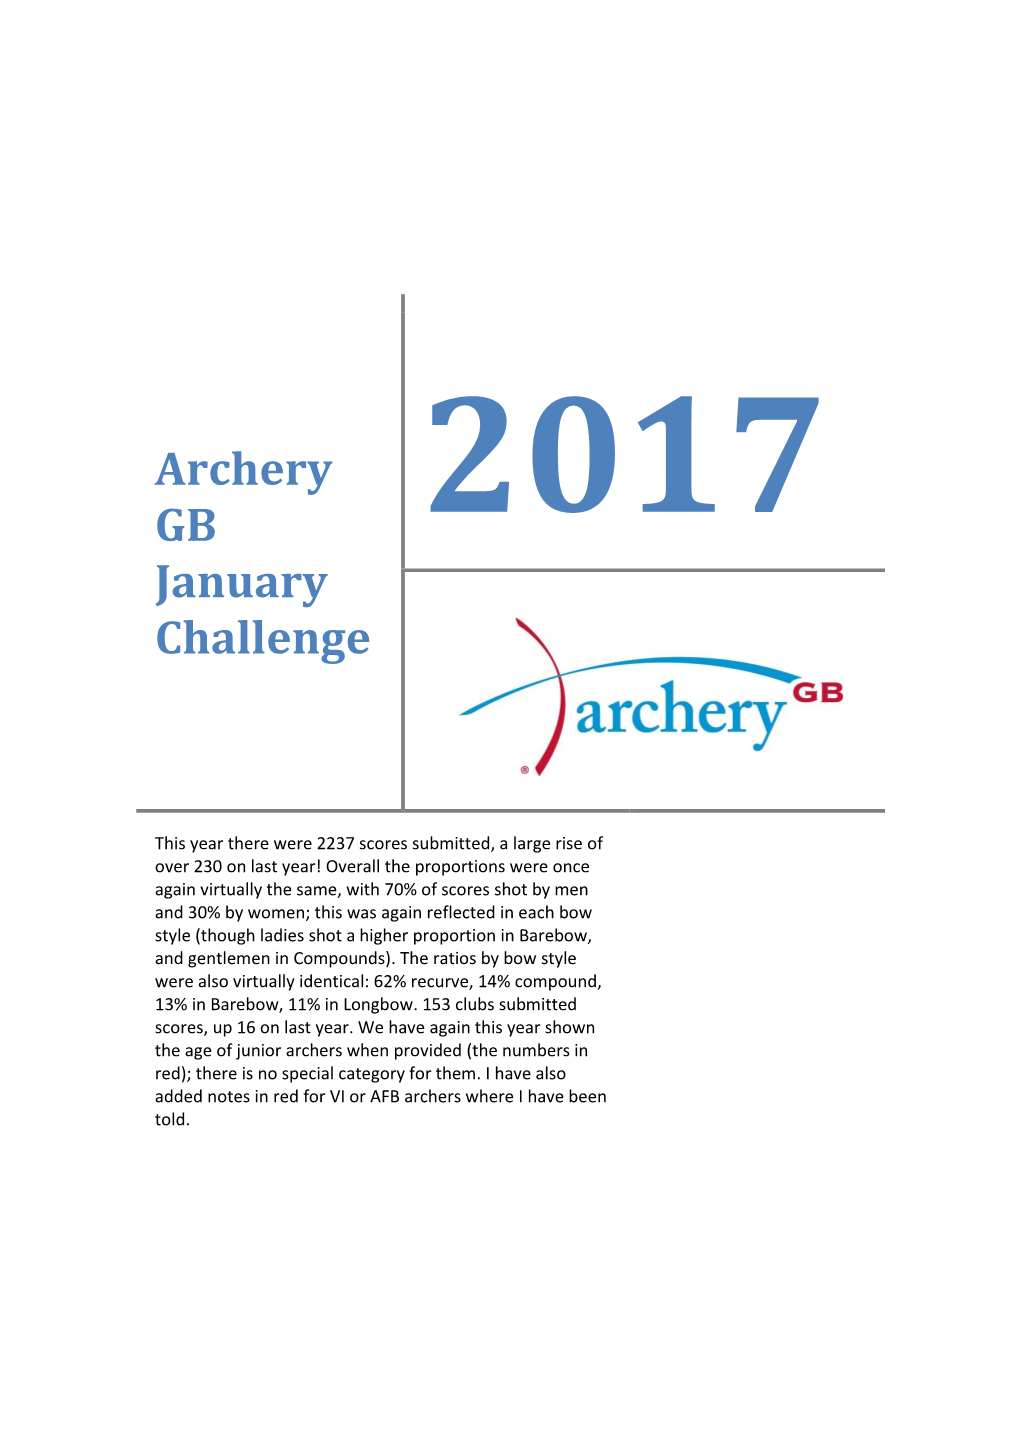 Archery GB January Challenge 2017